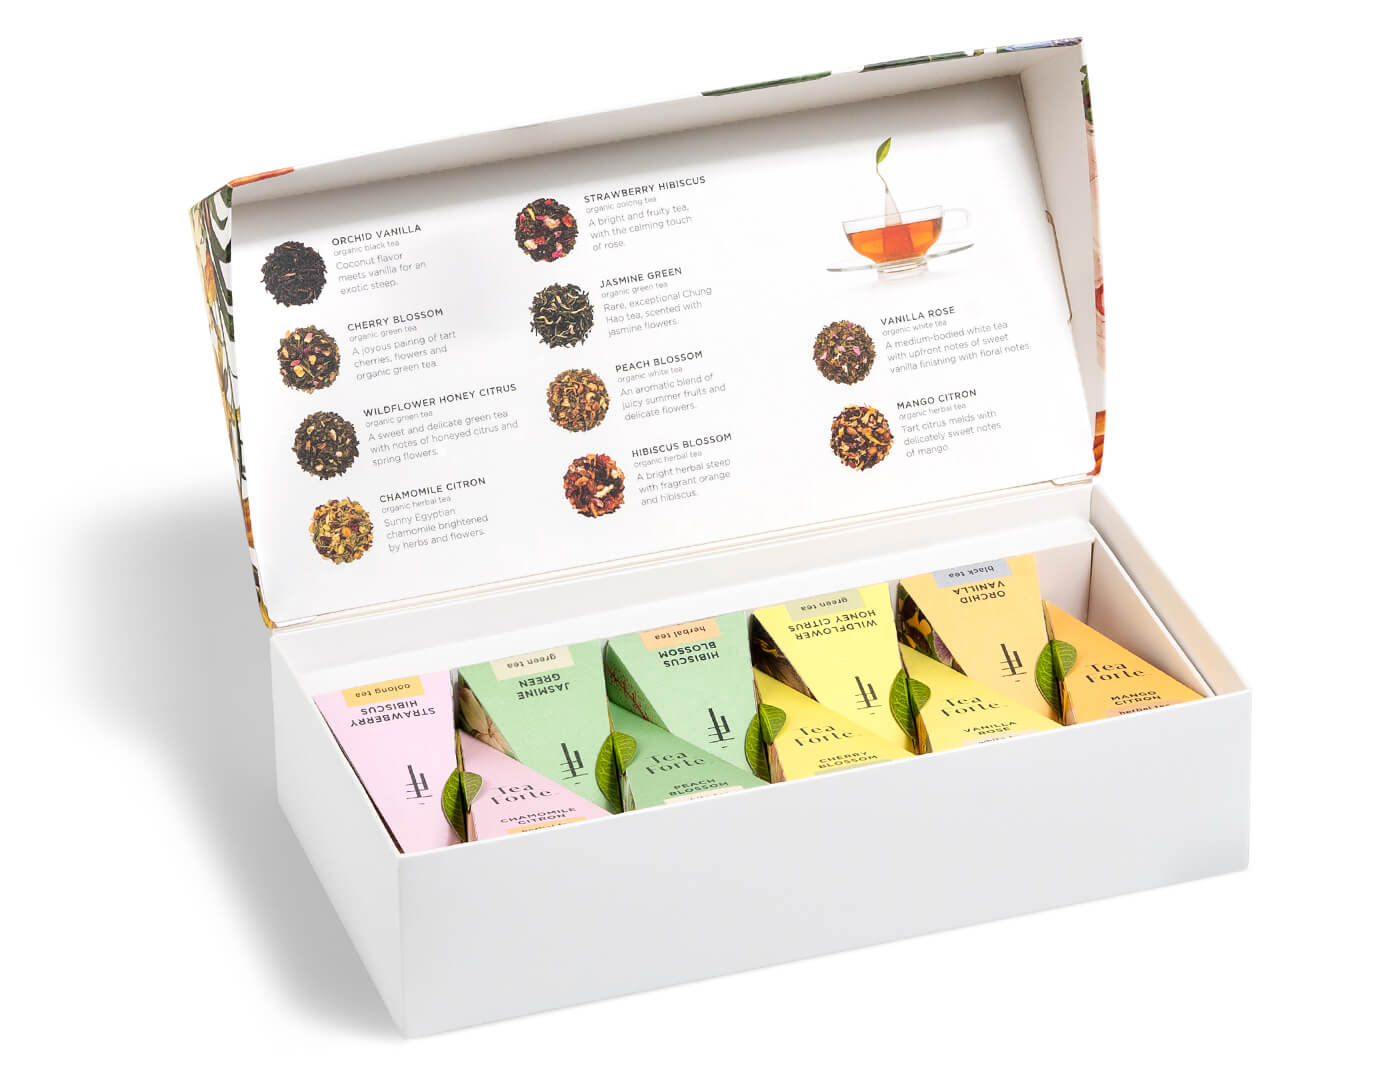 Jubilee Petite Presentation Box of 10 pyramid teas, lid open